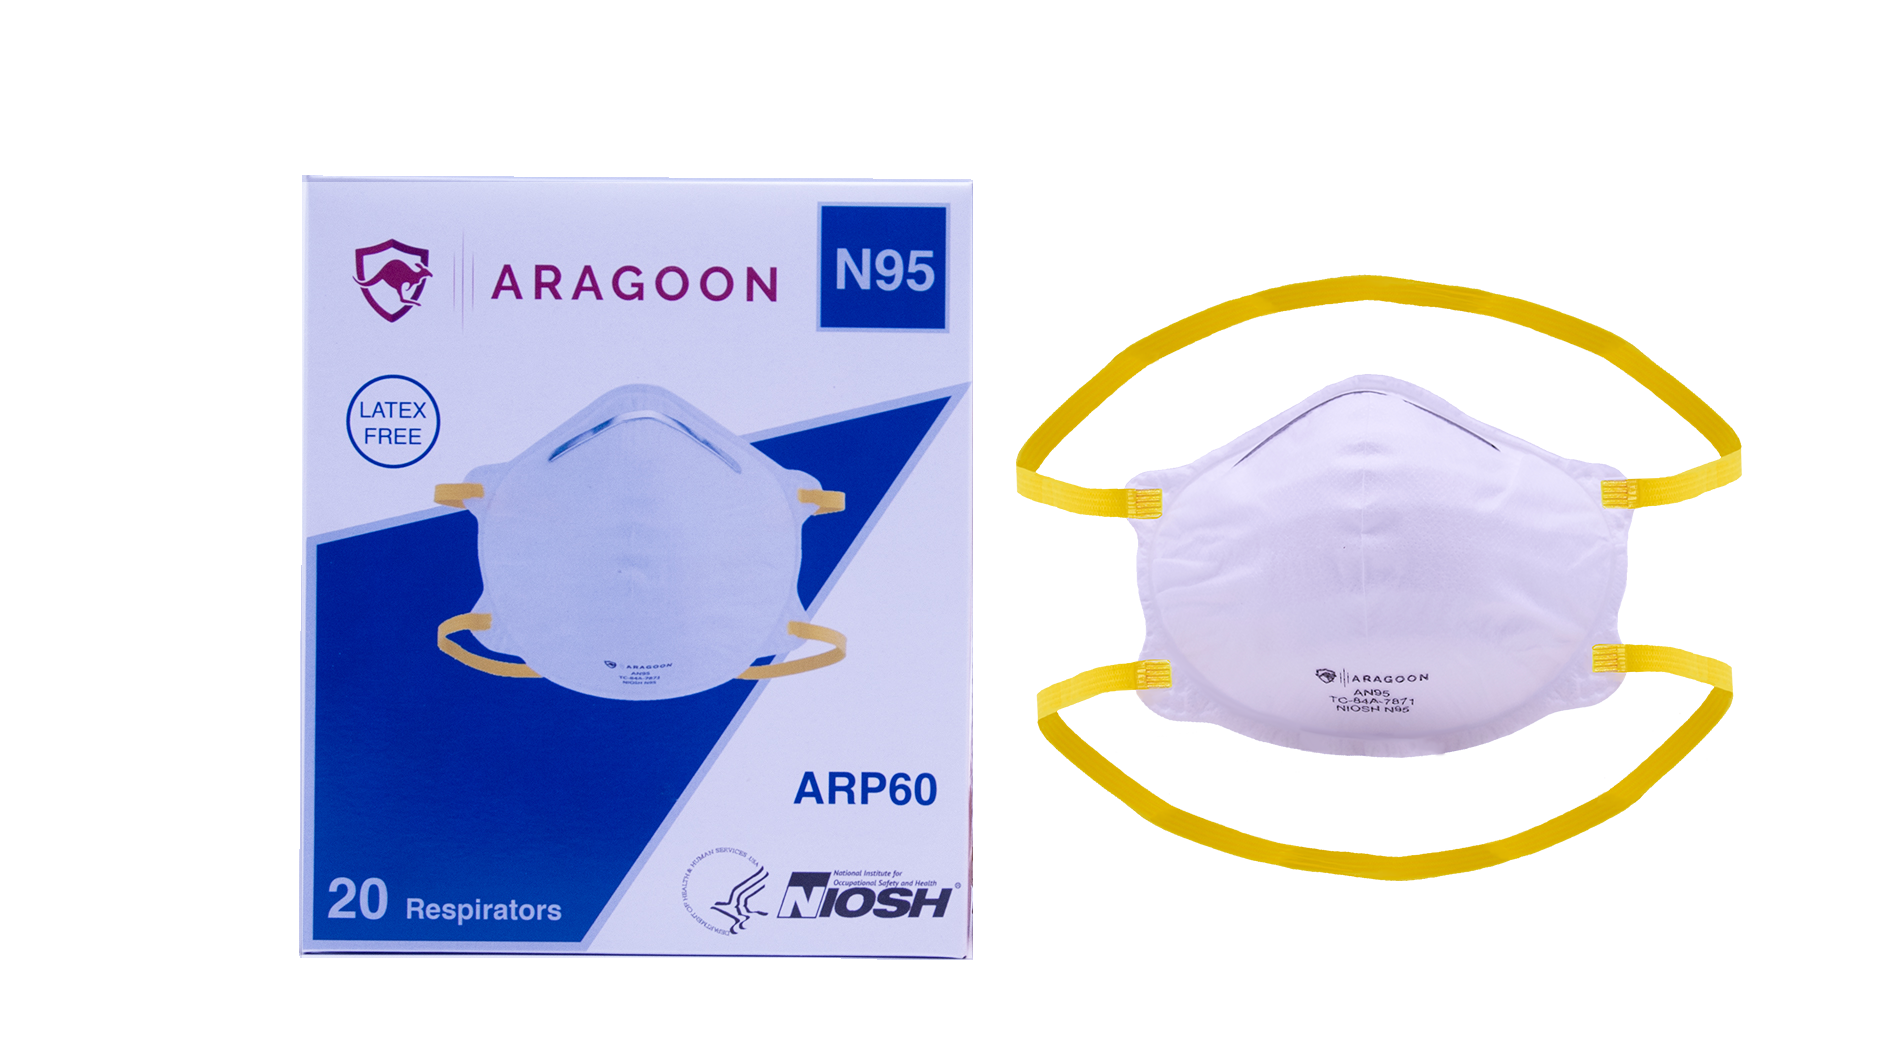 ARAGOON AN95 Face Mask (ARP60) (Box of 20) Respirator N95 Mask Niosh PPE Safety Protection